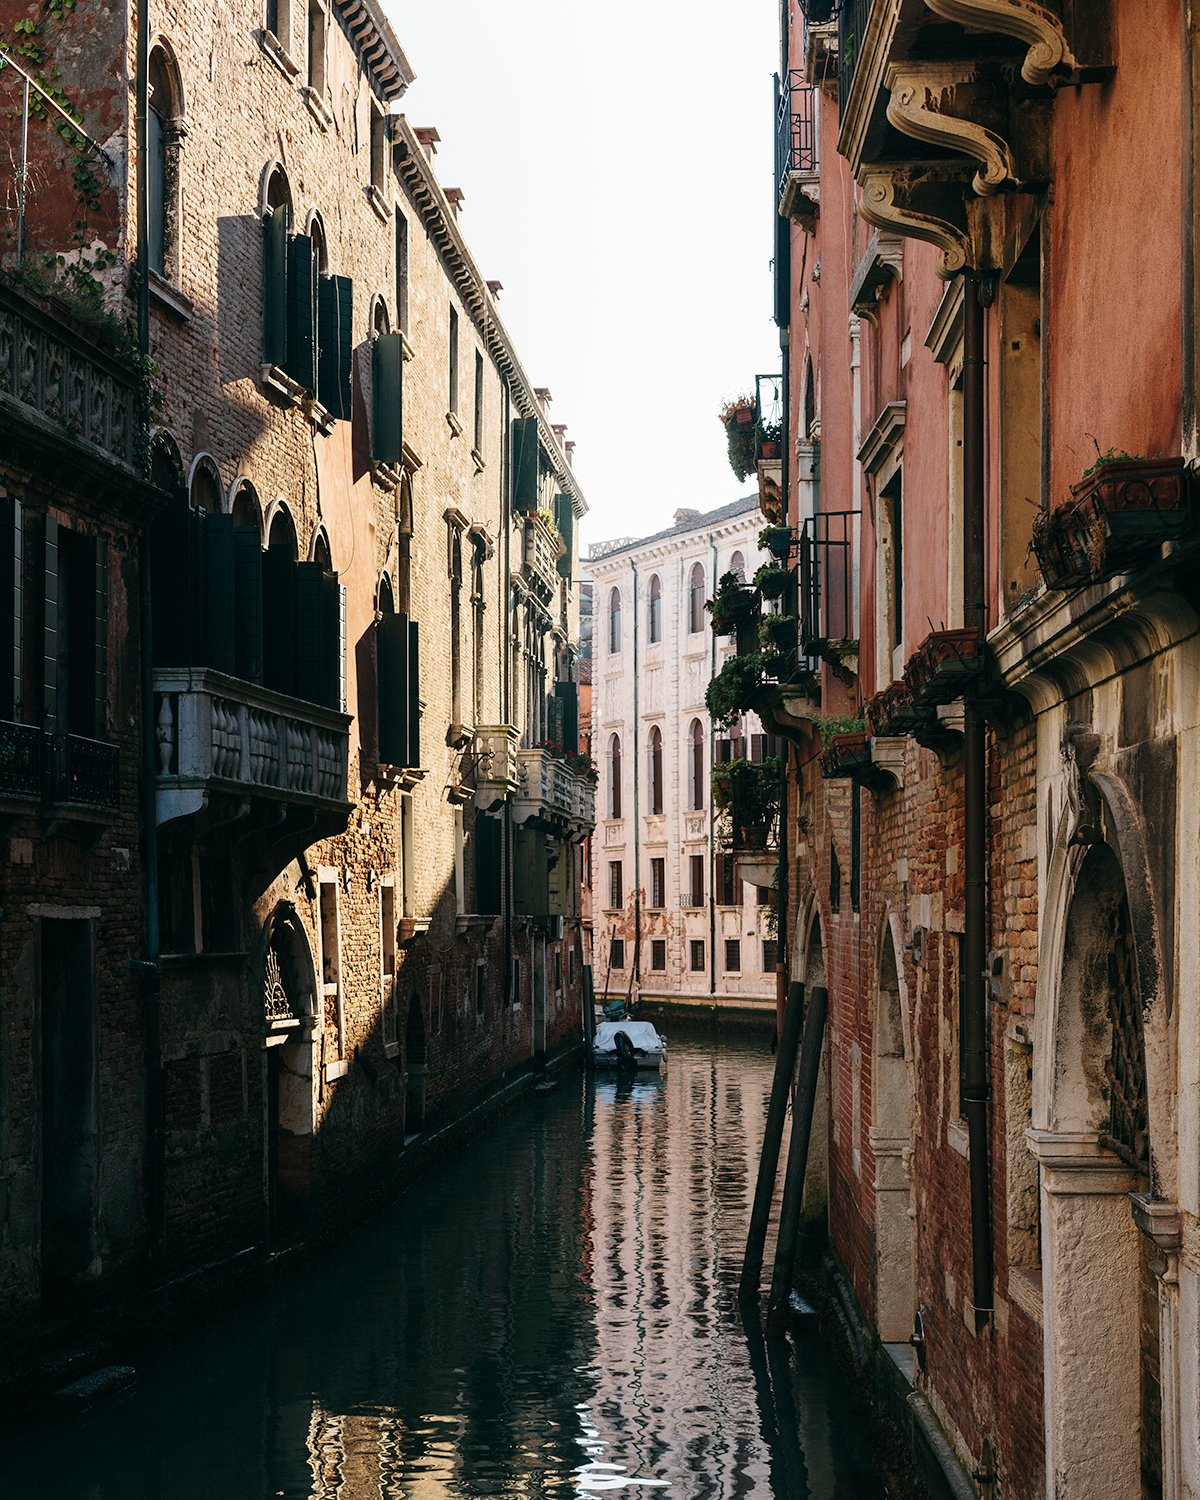 Brandon-Sampson-Photography-Italy-Venice